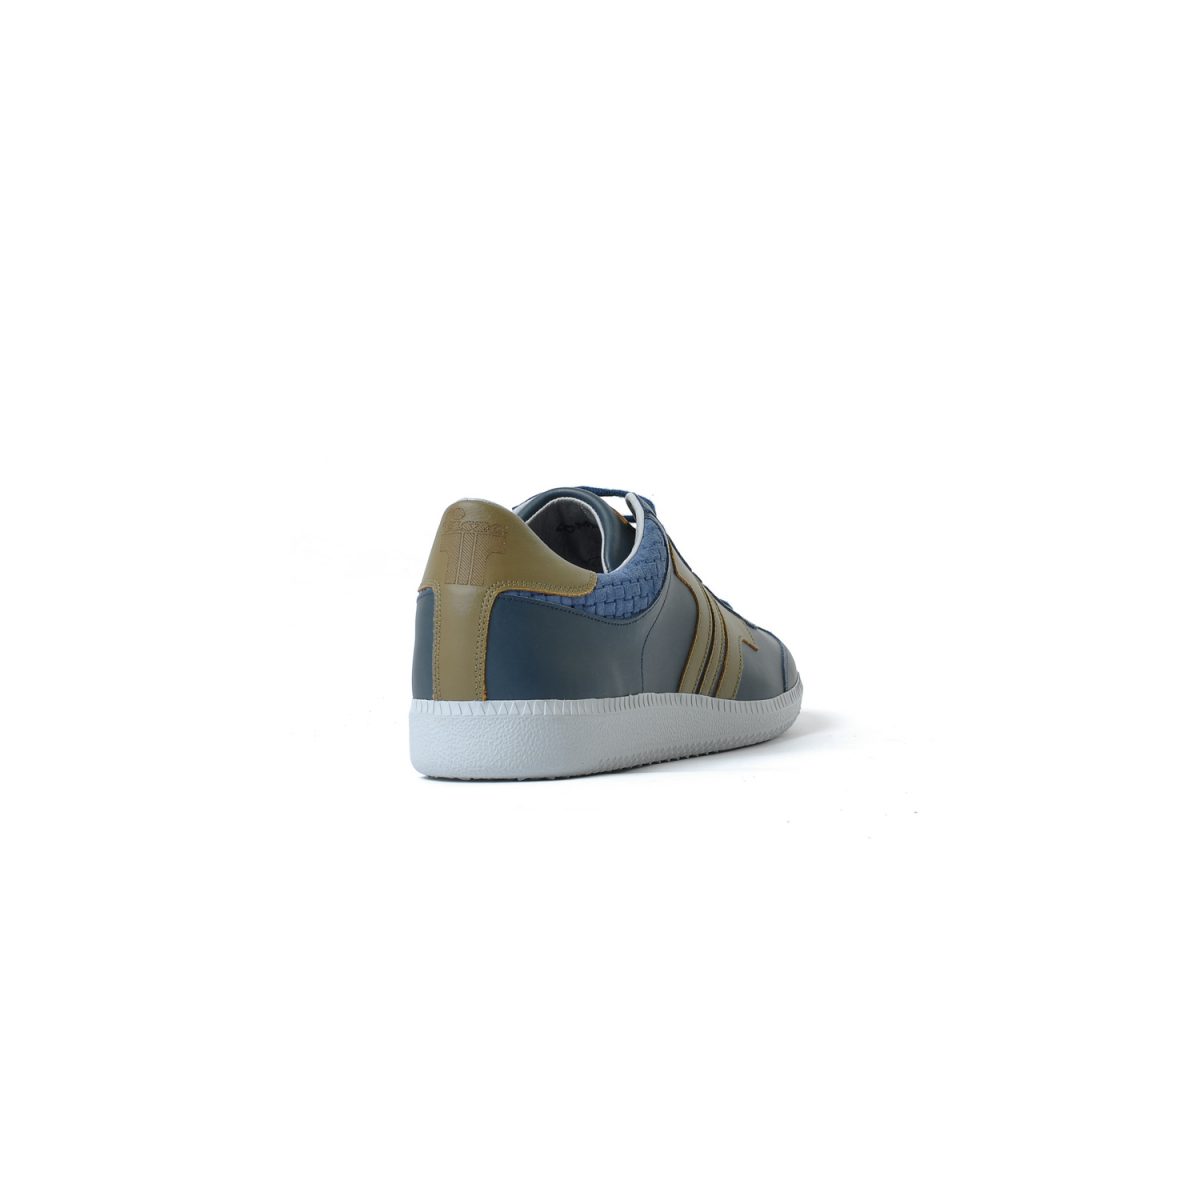 Tisza shoes - Compakt - Navy-khaki